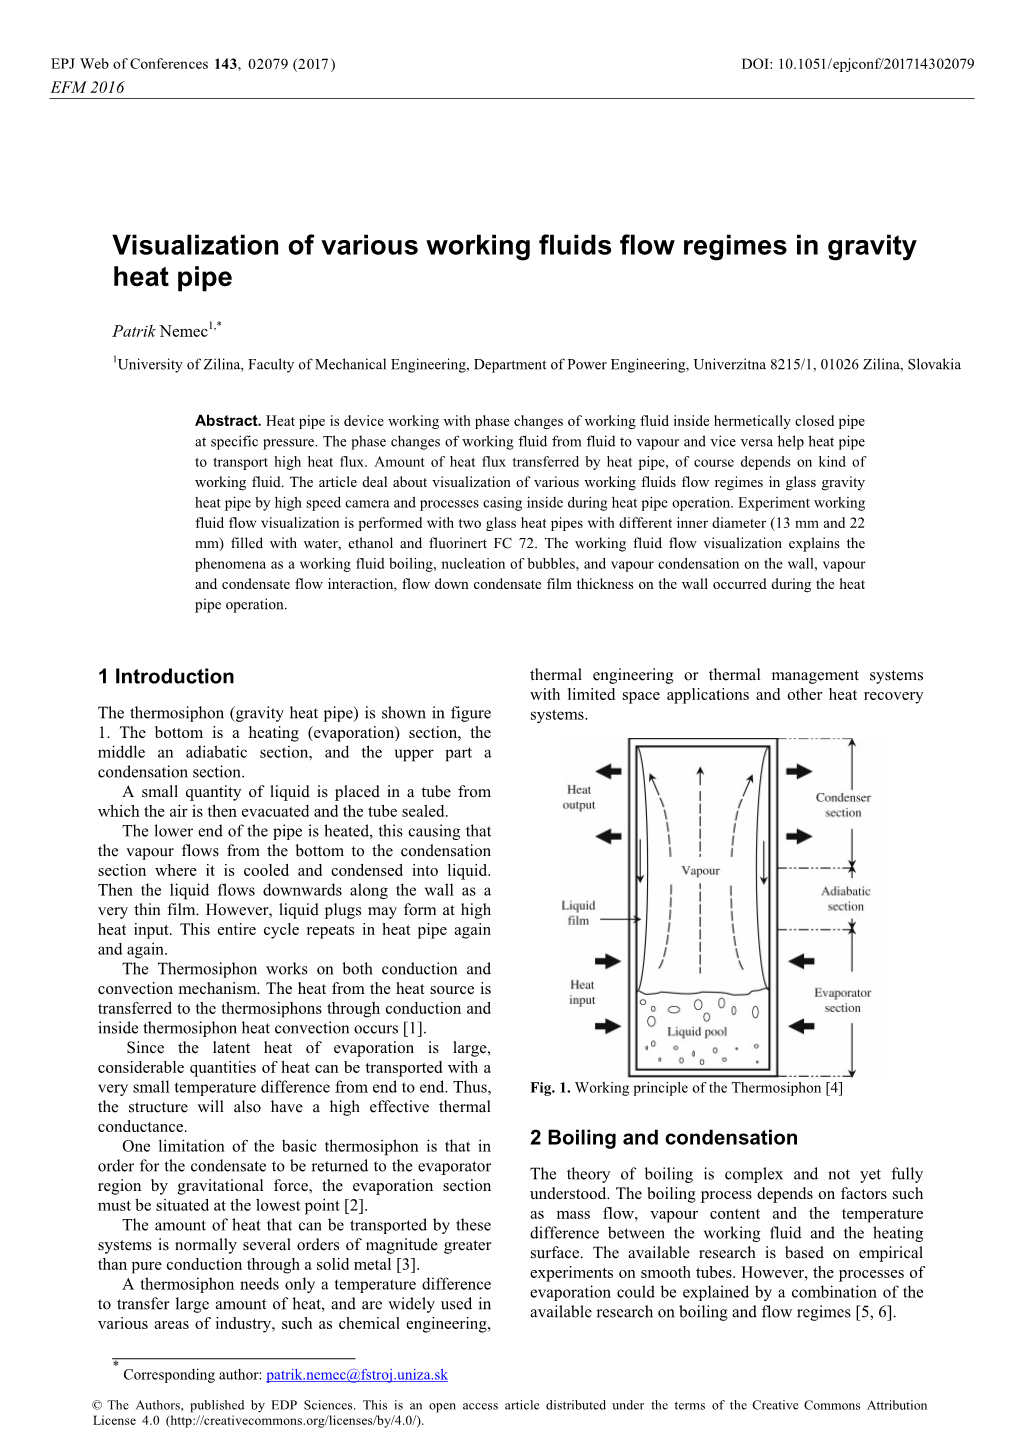 Visualization of Various Working Fluids Flow Regimes in Gravity Heat Pipe